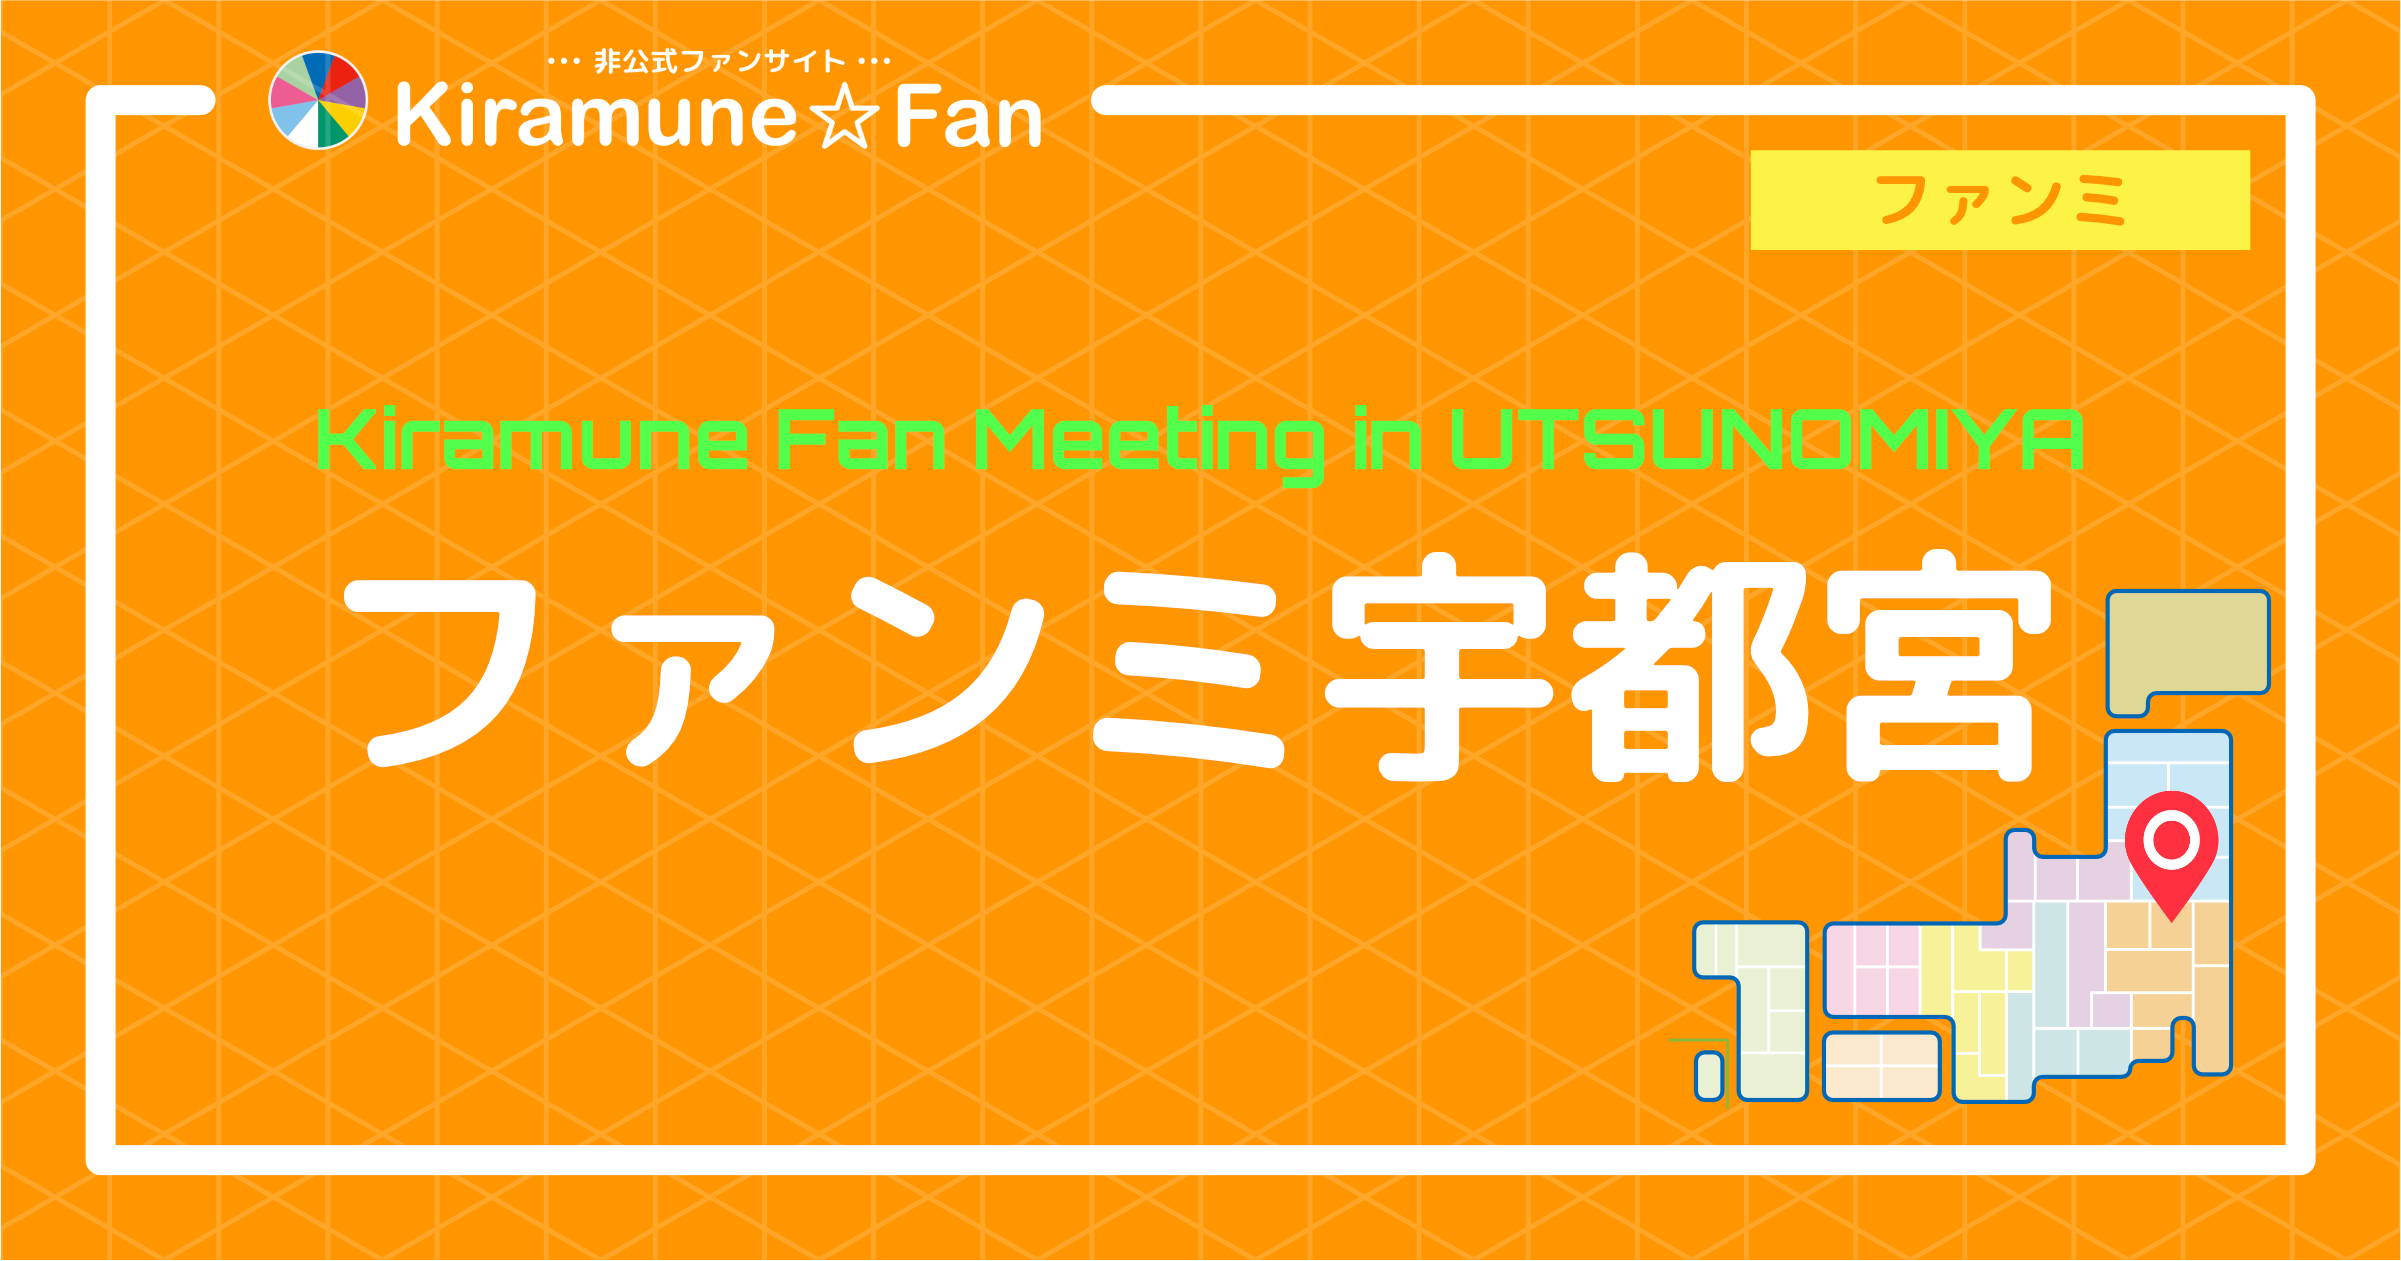 Kiramune Fan Meeting in UTSUNOMIYA | Kiramune☆Fan